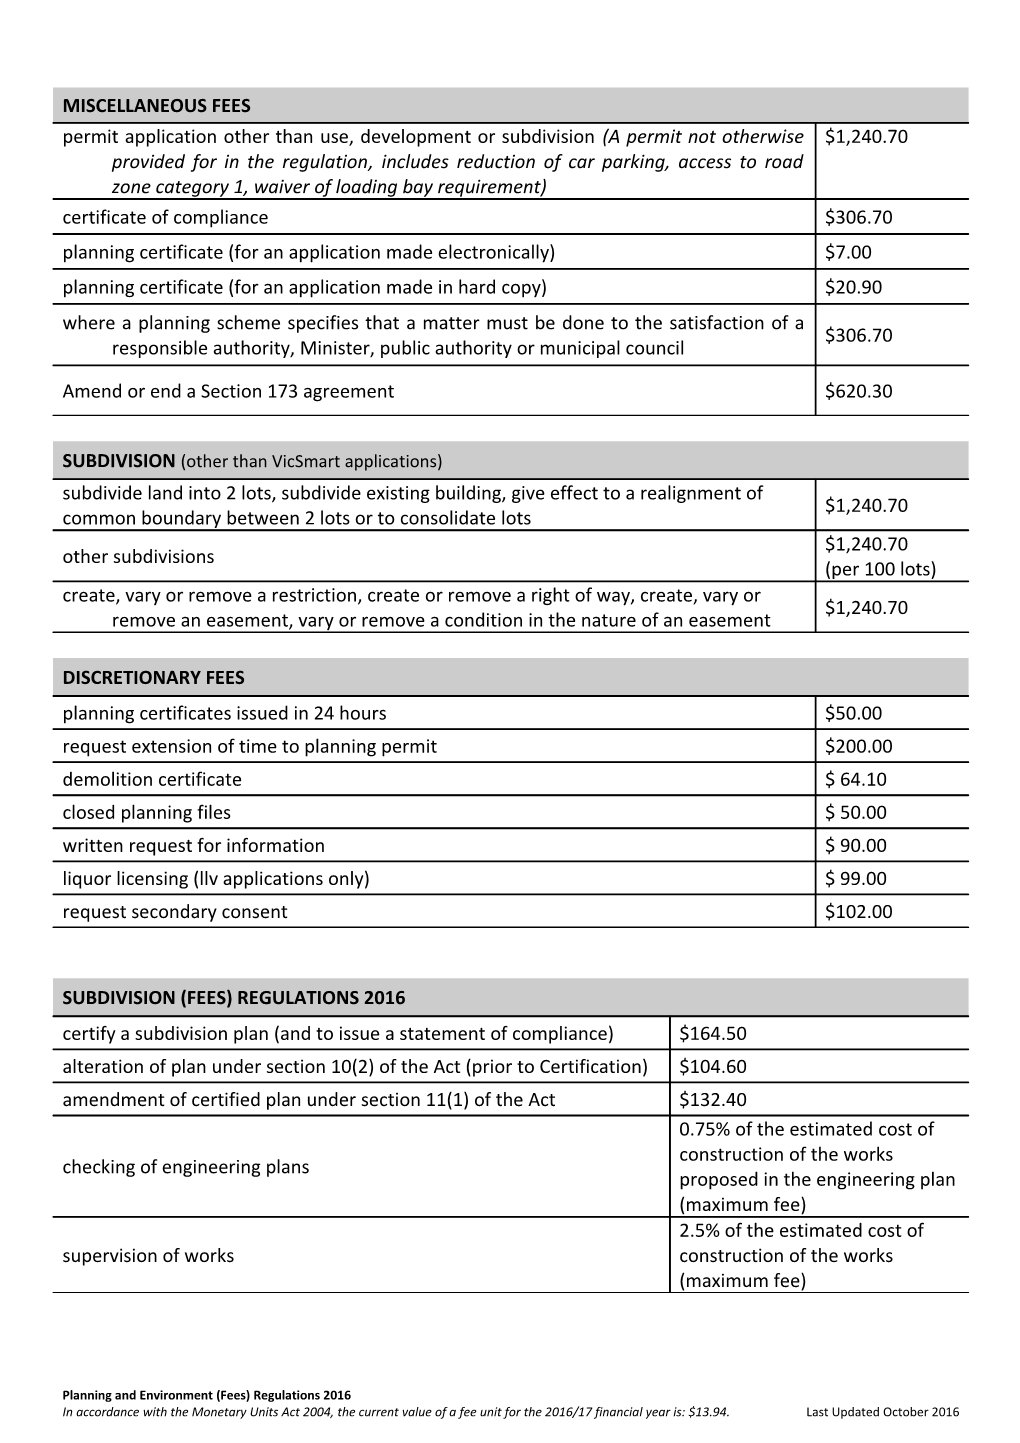 Planning & Environment (Fees) Regulations 2000